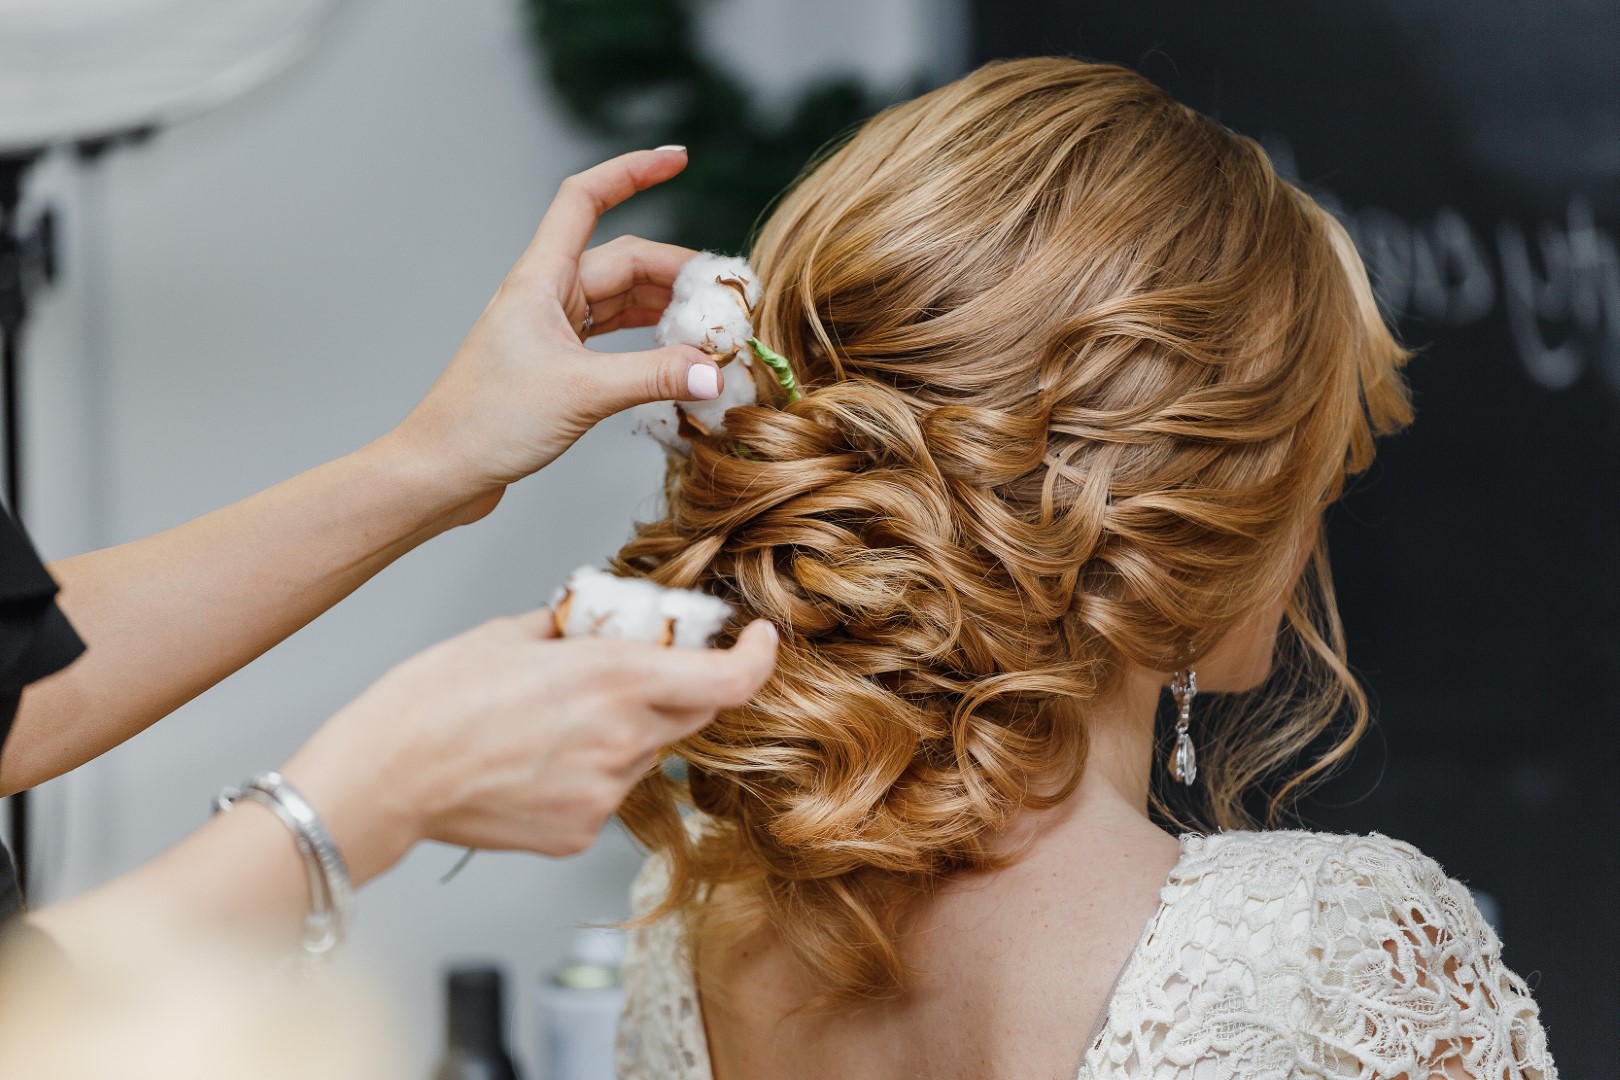 bridal preparation (hair styling or make up)